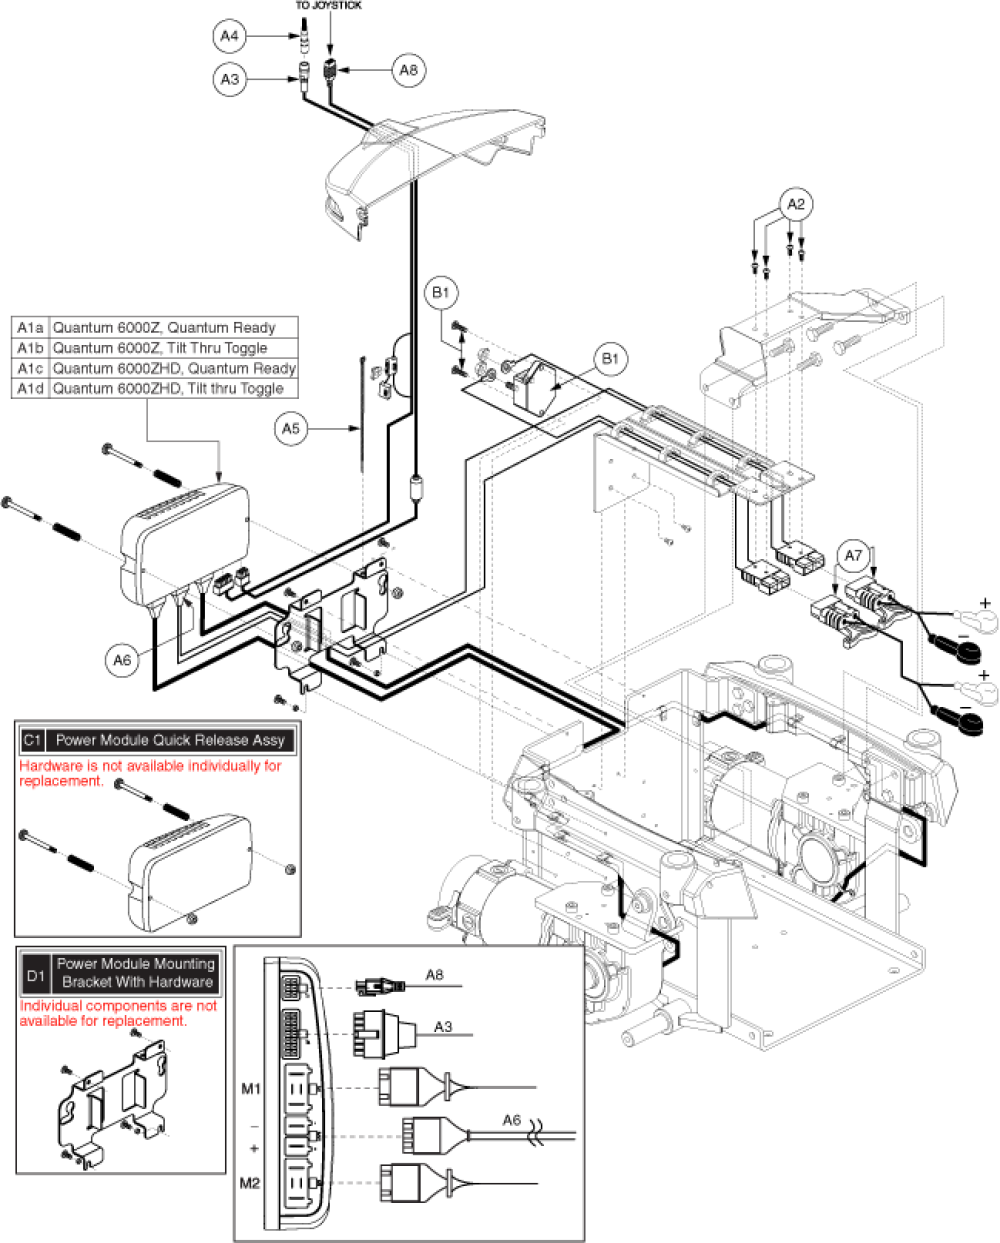 Electronics Assy - Ne+, Hs Motor, Quantum/ Toggle parts diagram